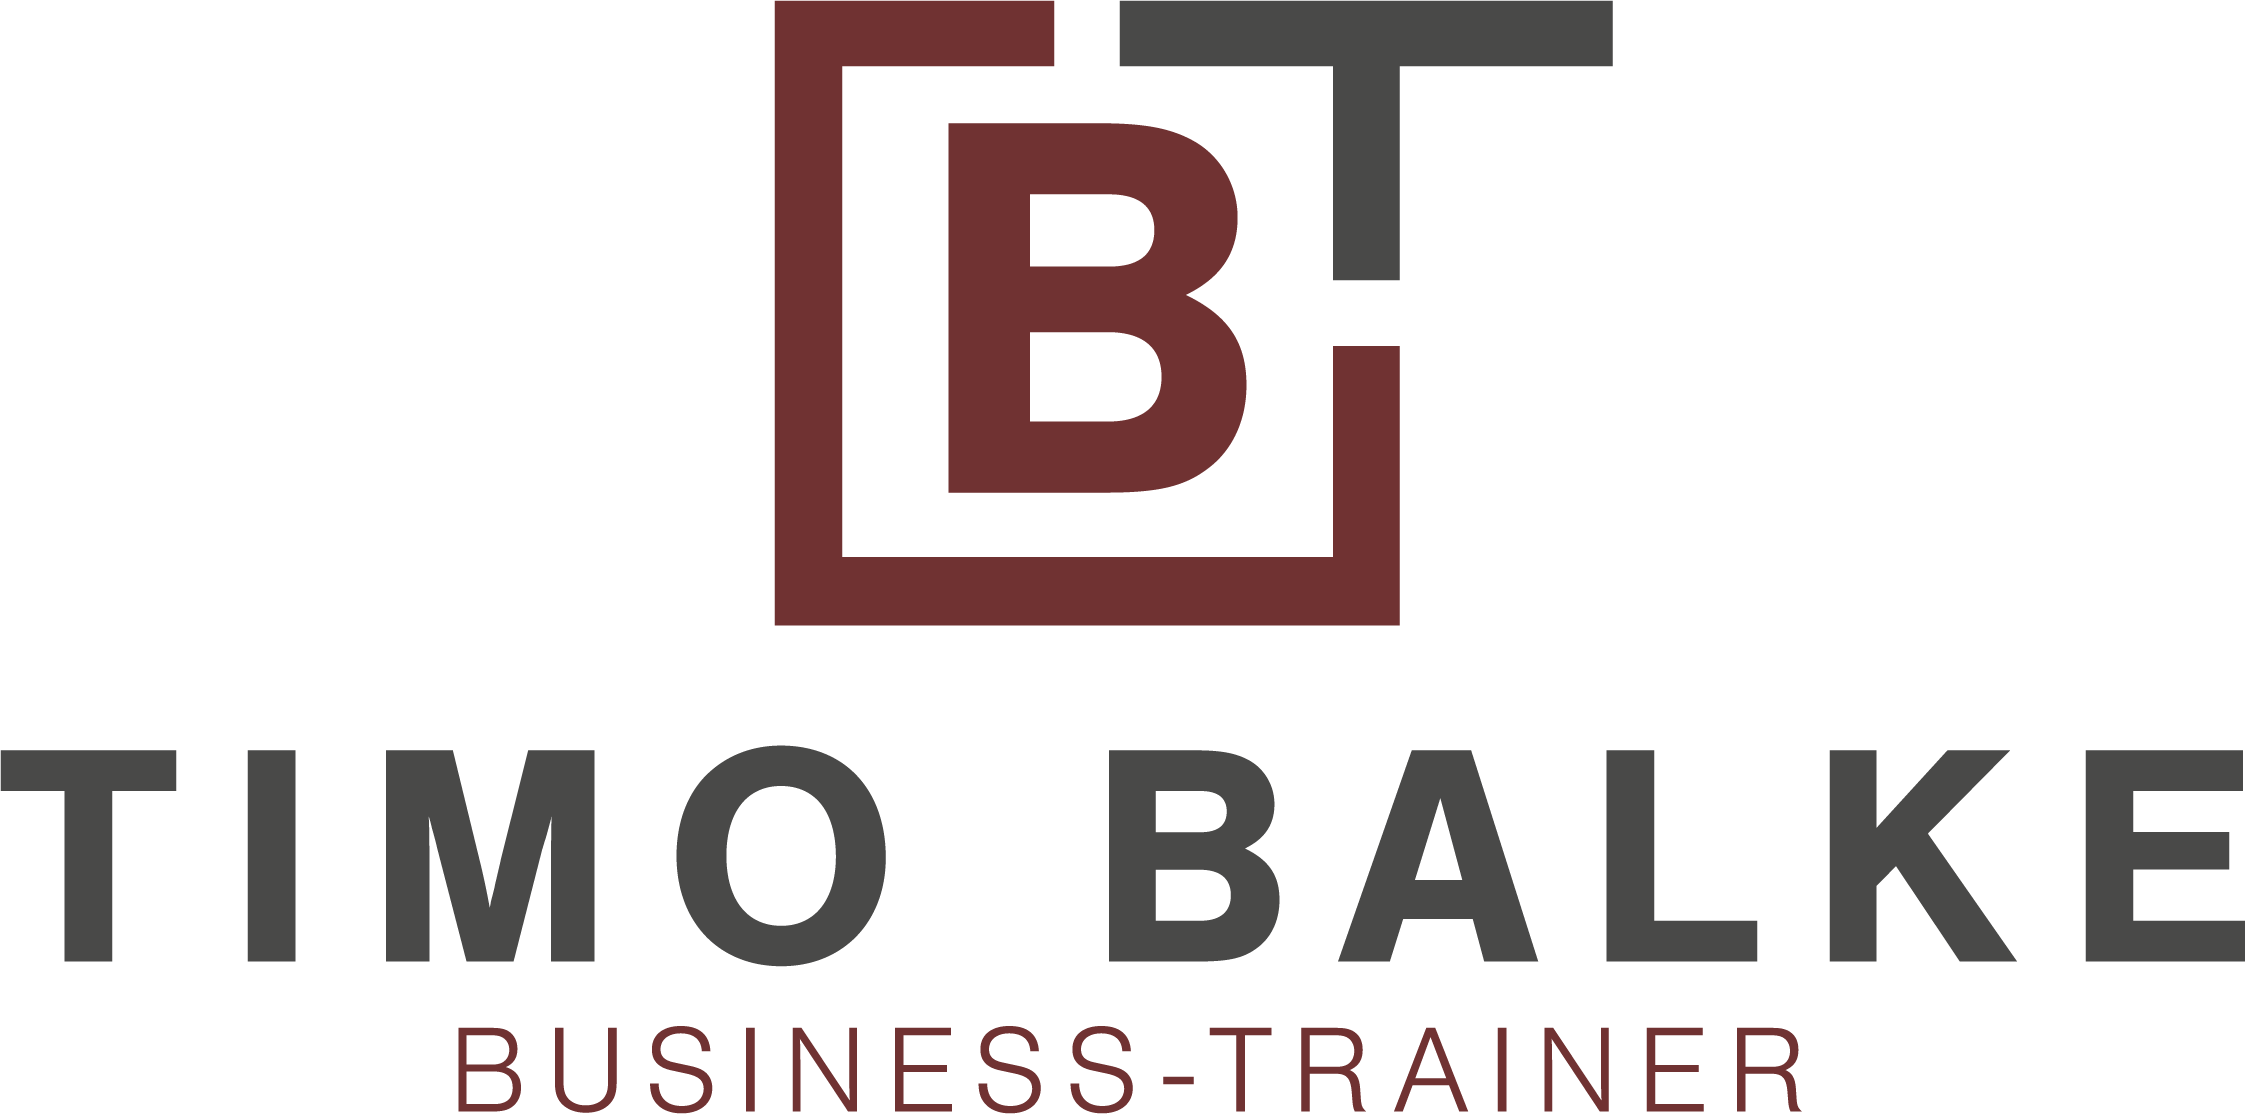 Business-Trainer - Timo Balke